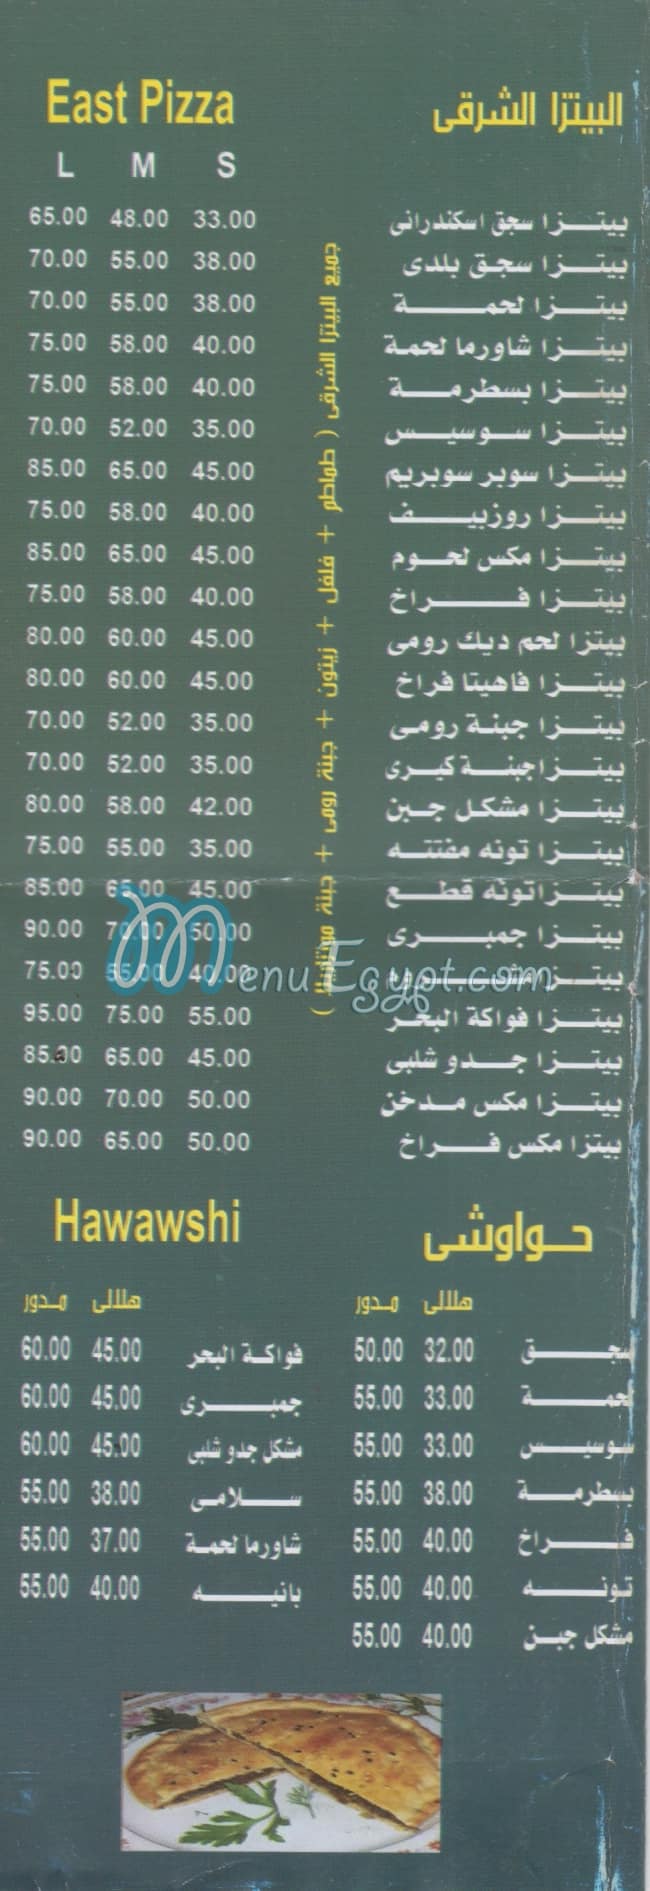 Gedo Shalaby online menu